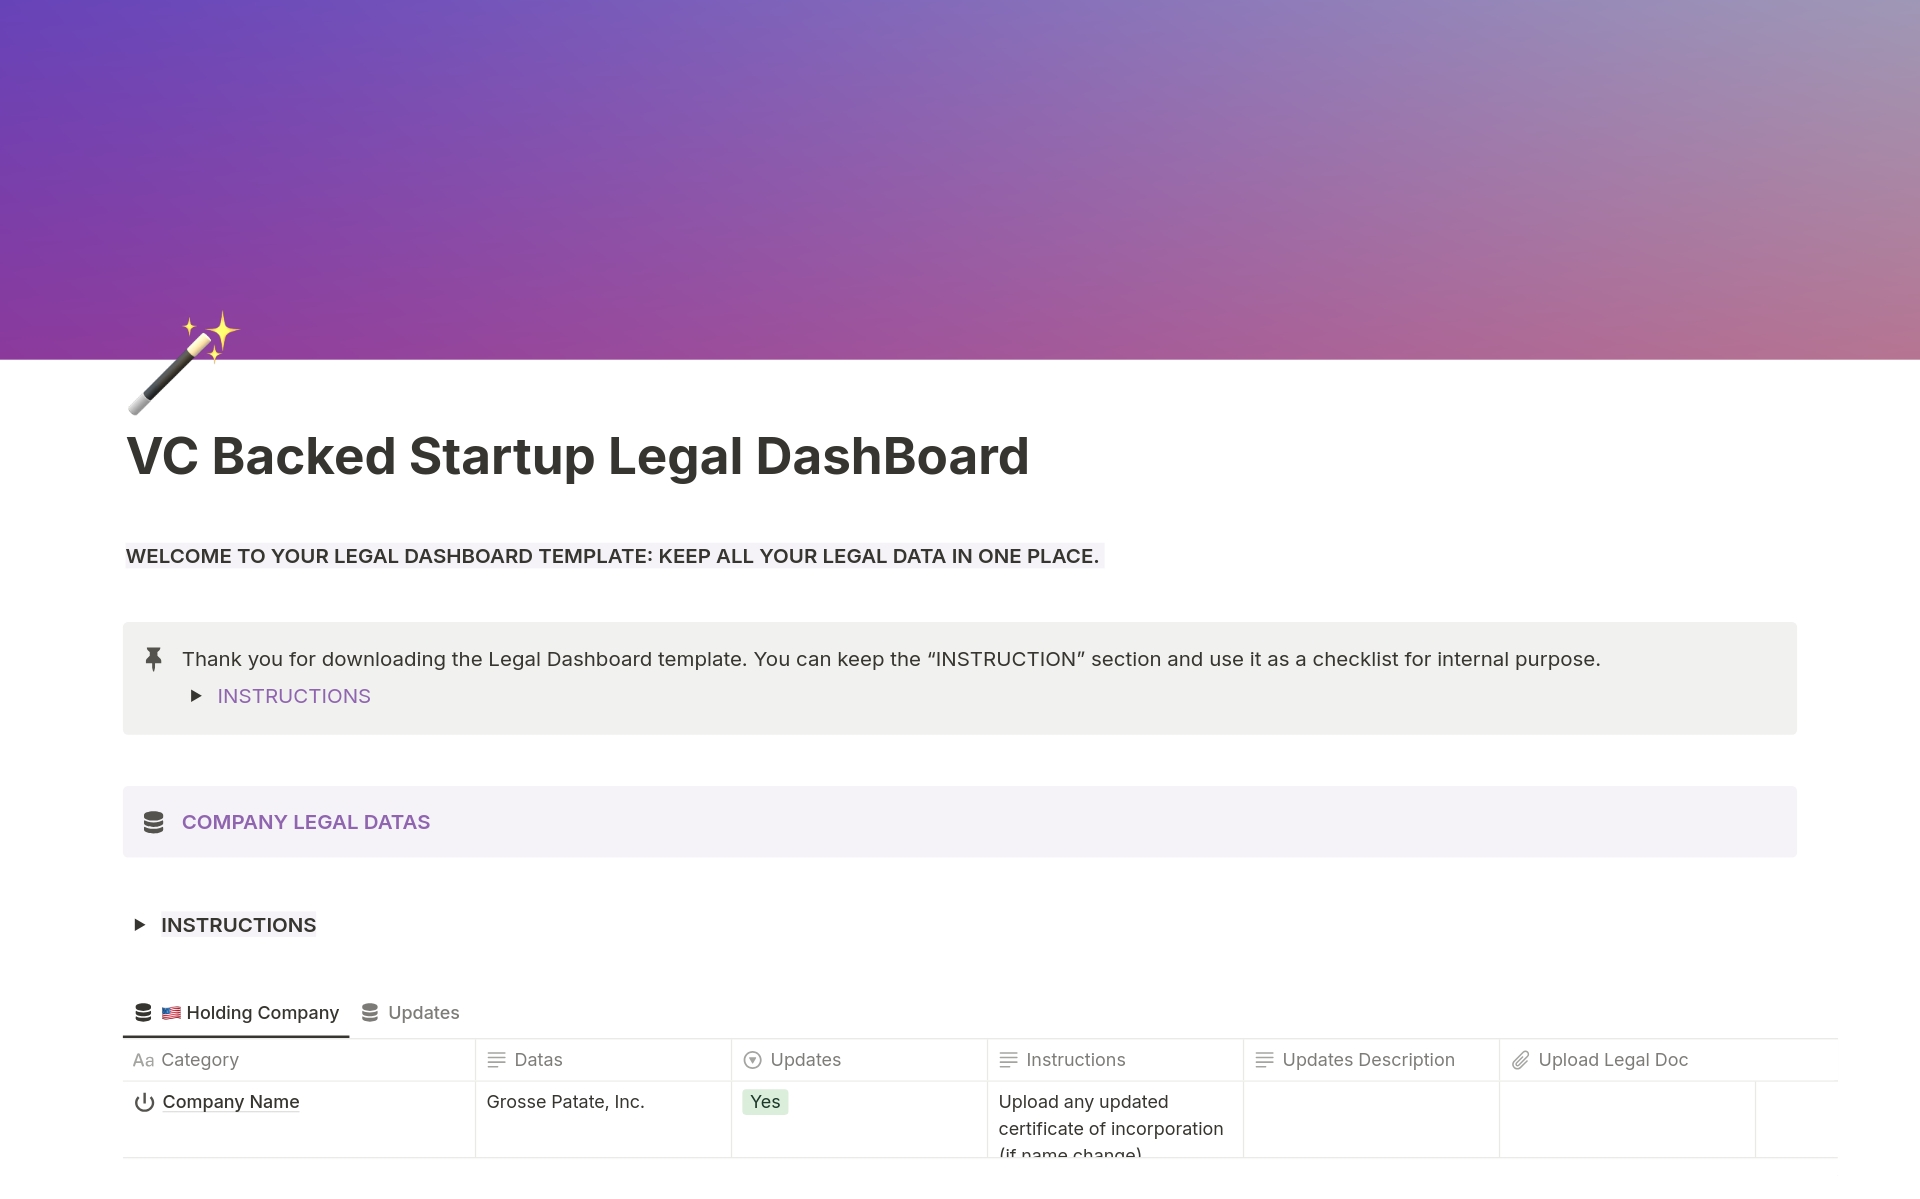 VC Backed Startup Legal Dashboard 🌎 님의 템플릿 미리보기